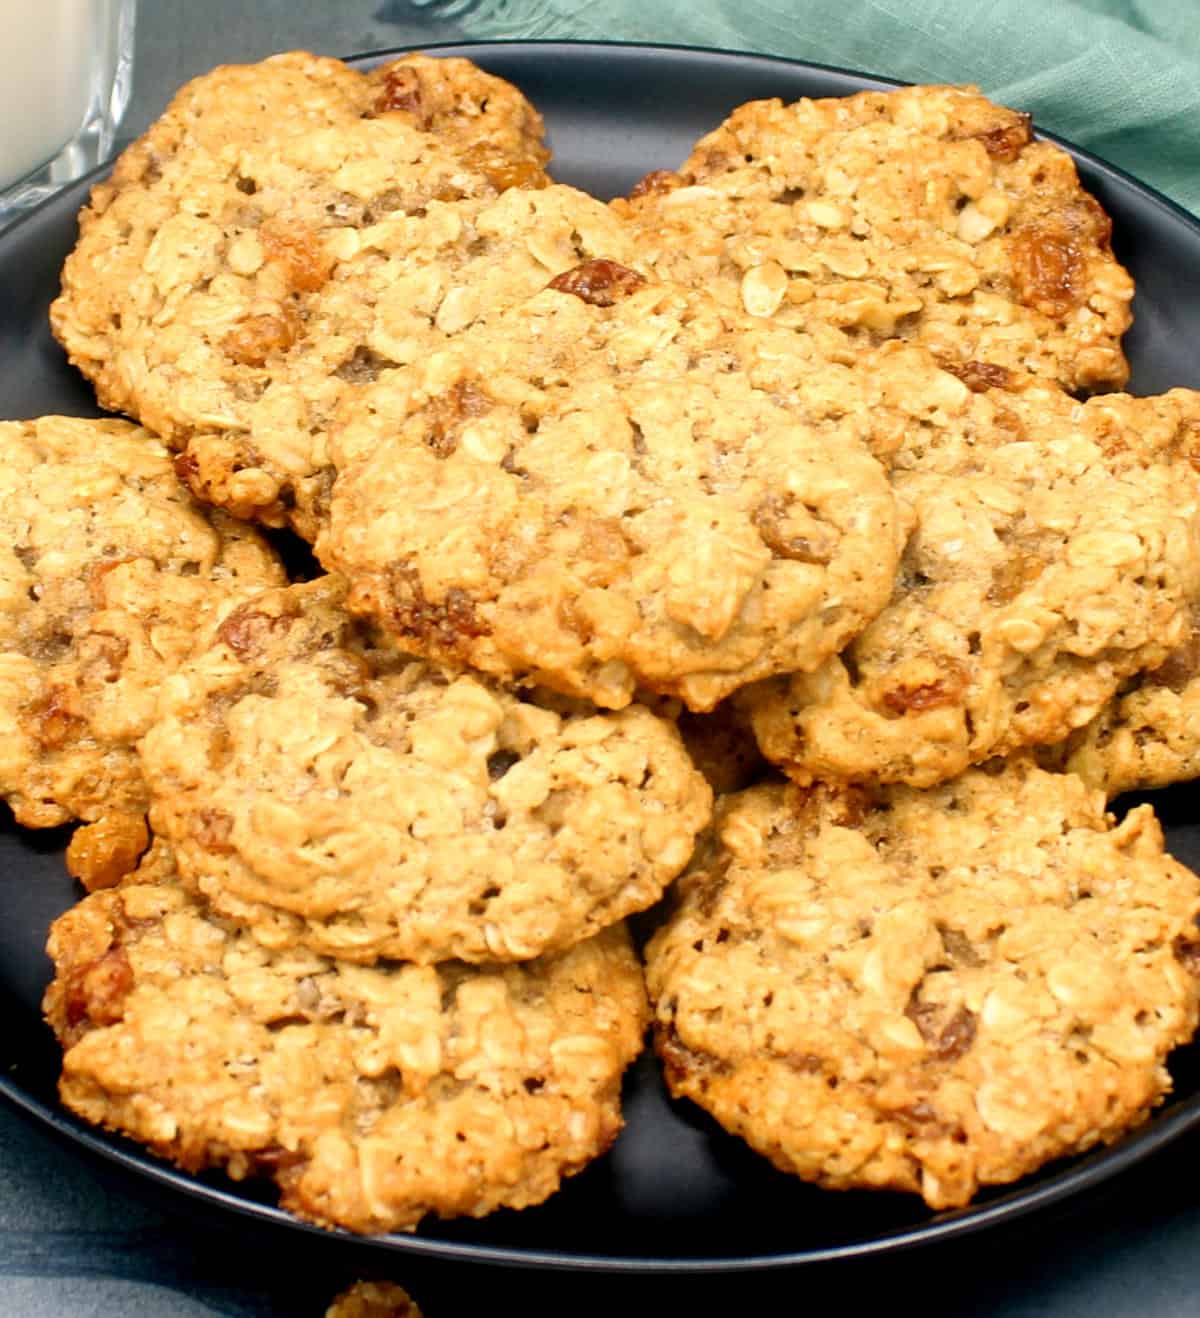 Vegan oatmeal raisin cookies piled on a black plate.